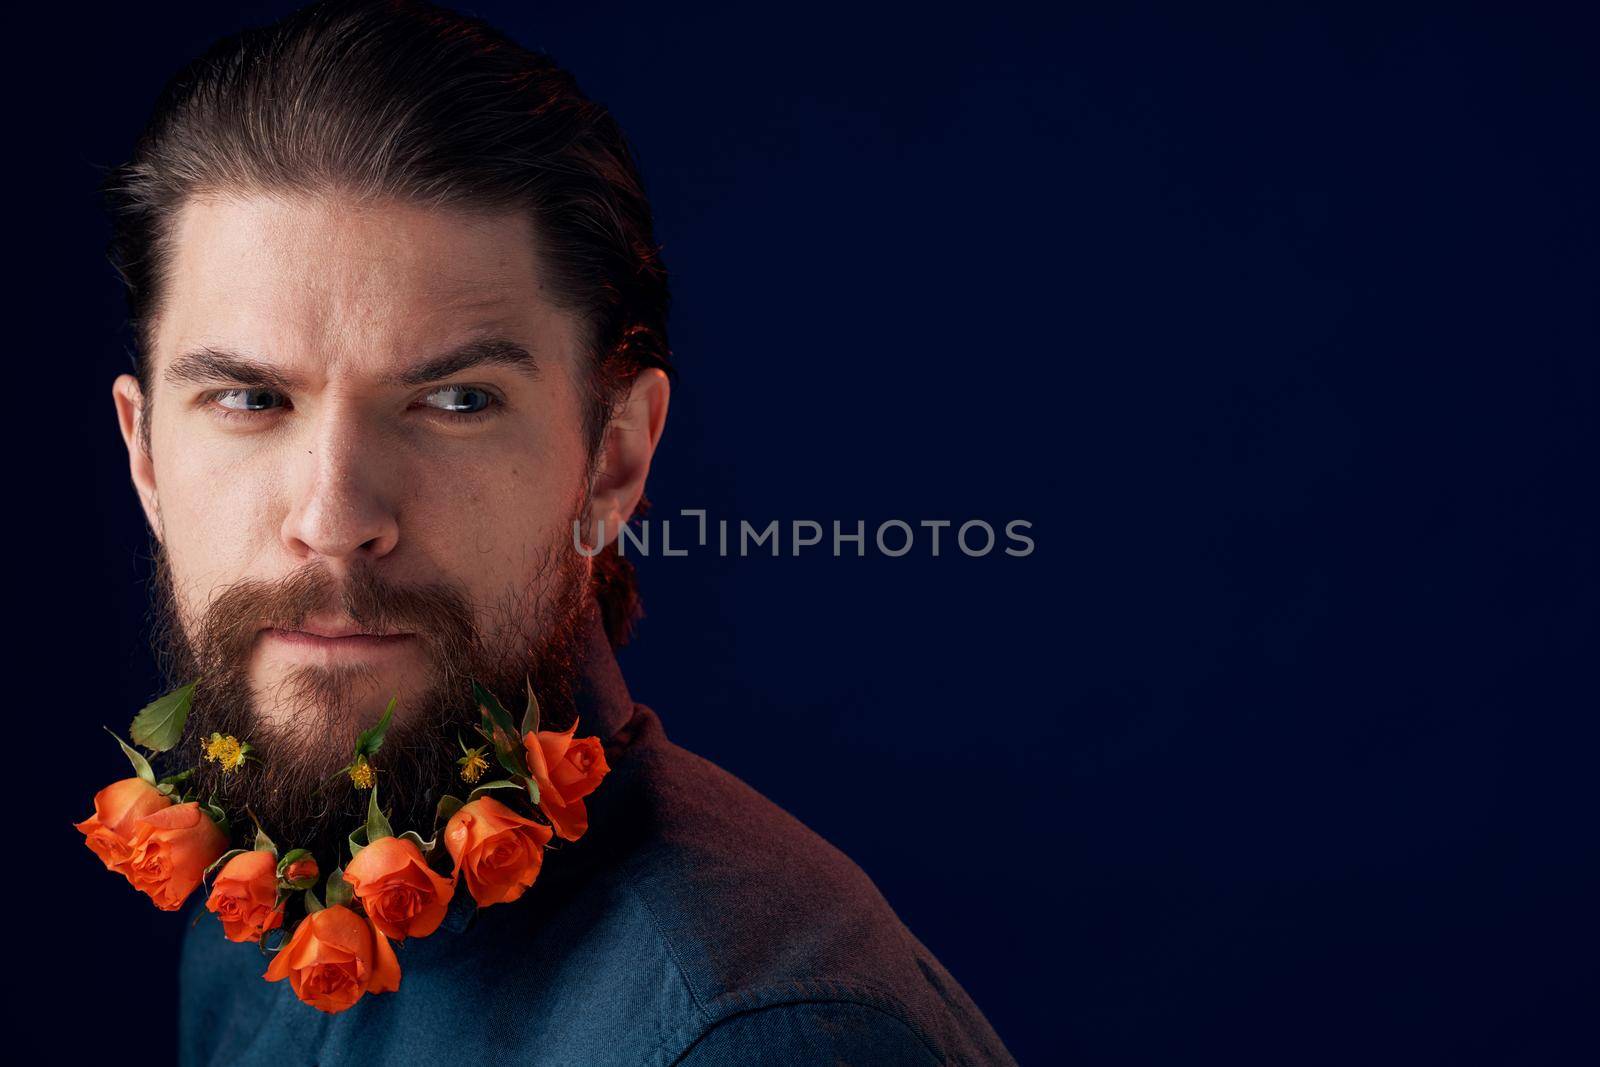 Man beard flowers decoration romance gift dark background by SHOTPRIME